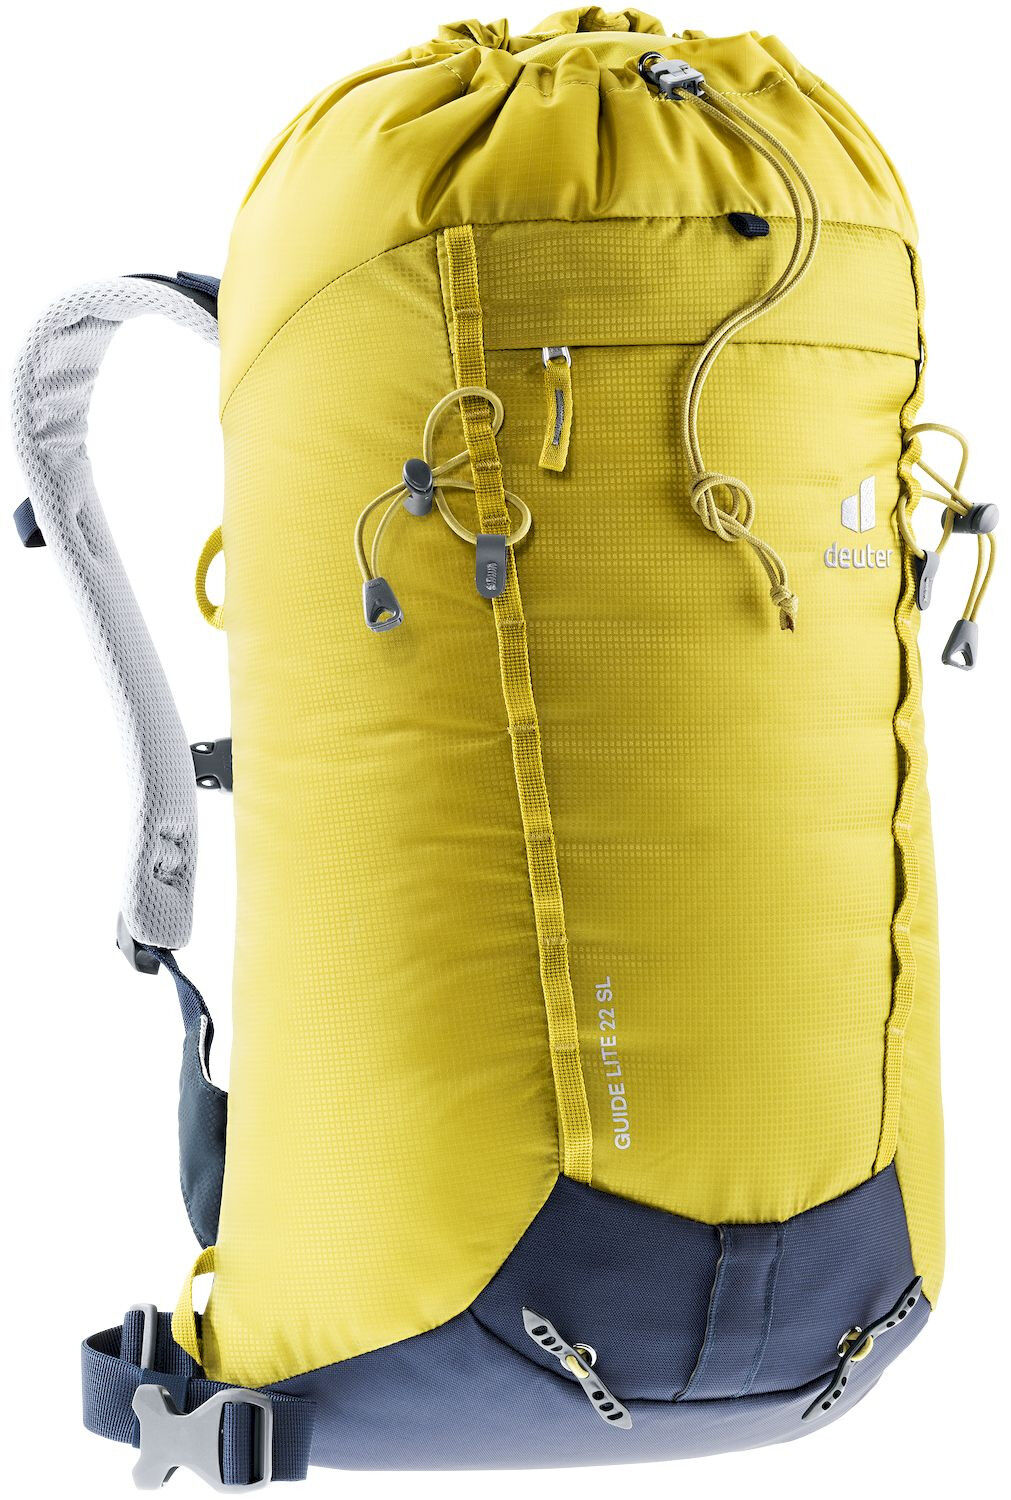 Deuter Guide Lite 22 SL - Mountaineering backpack - Women's